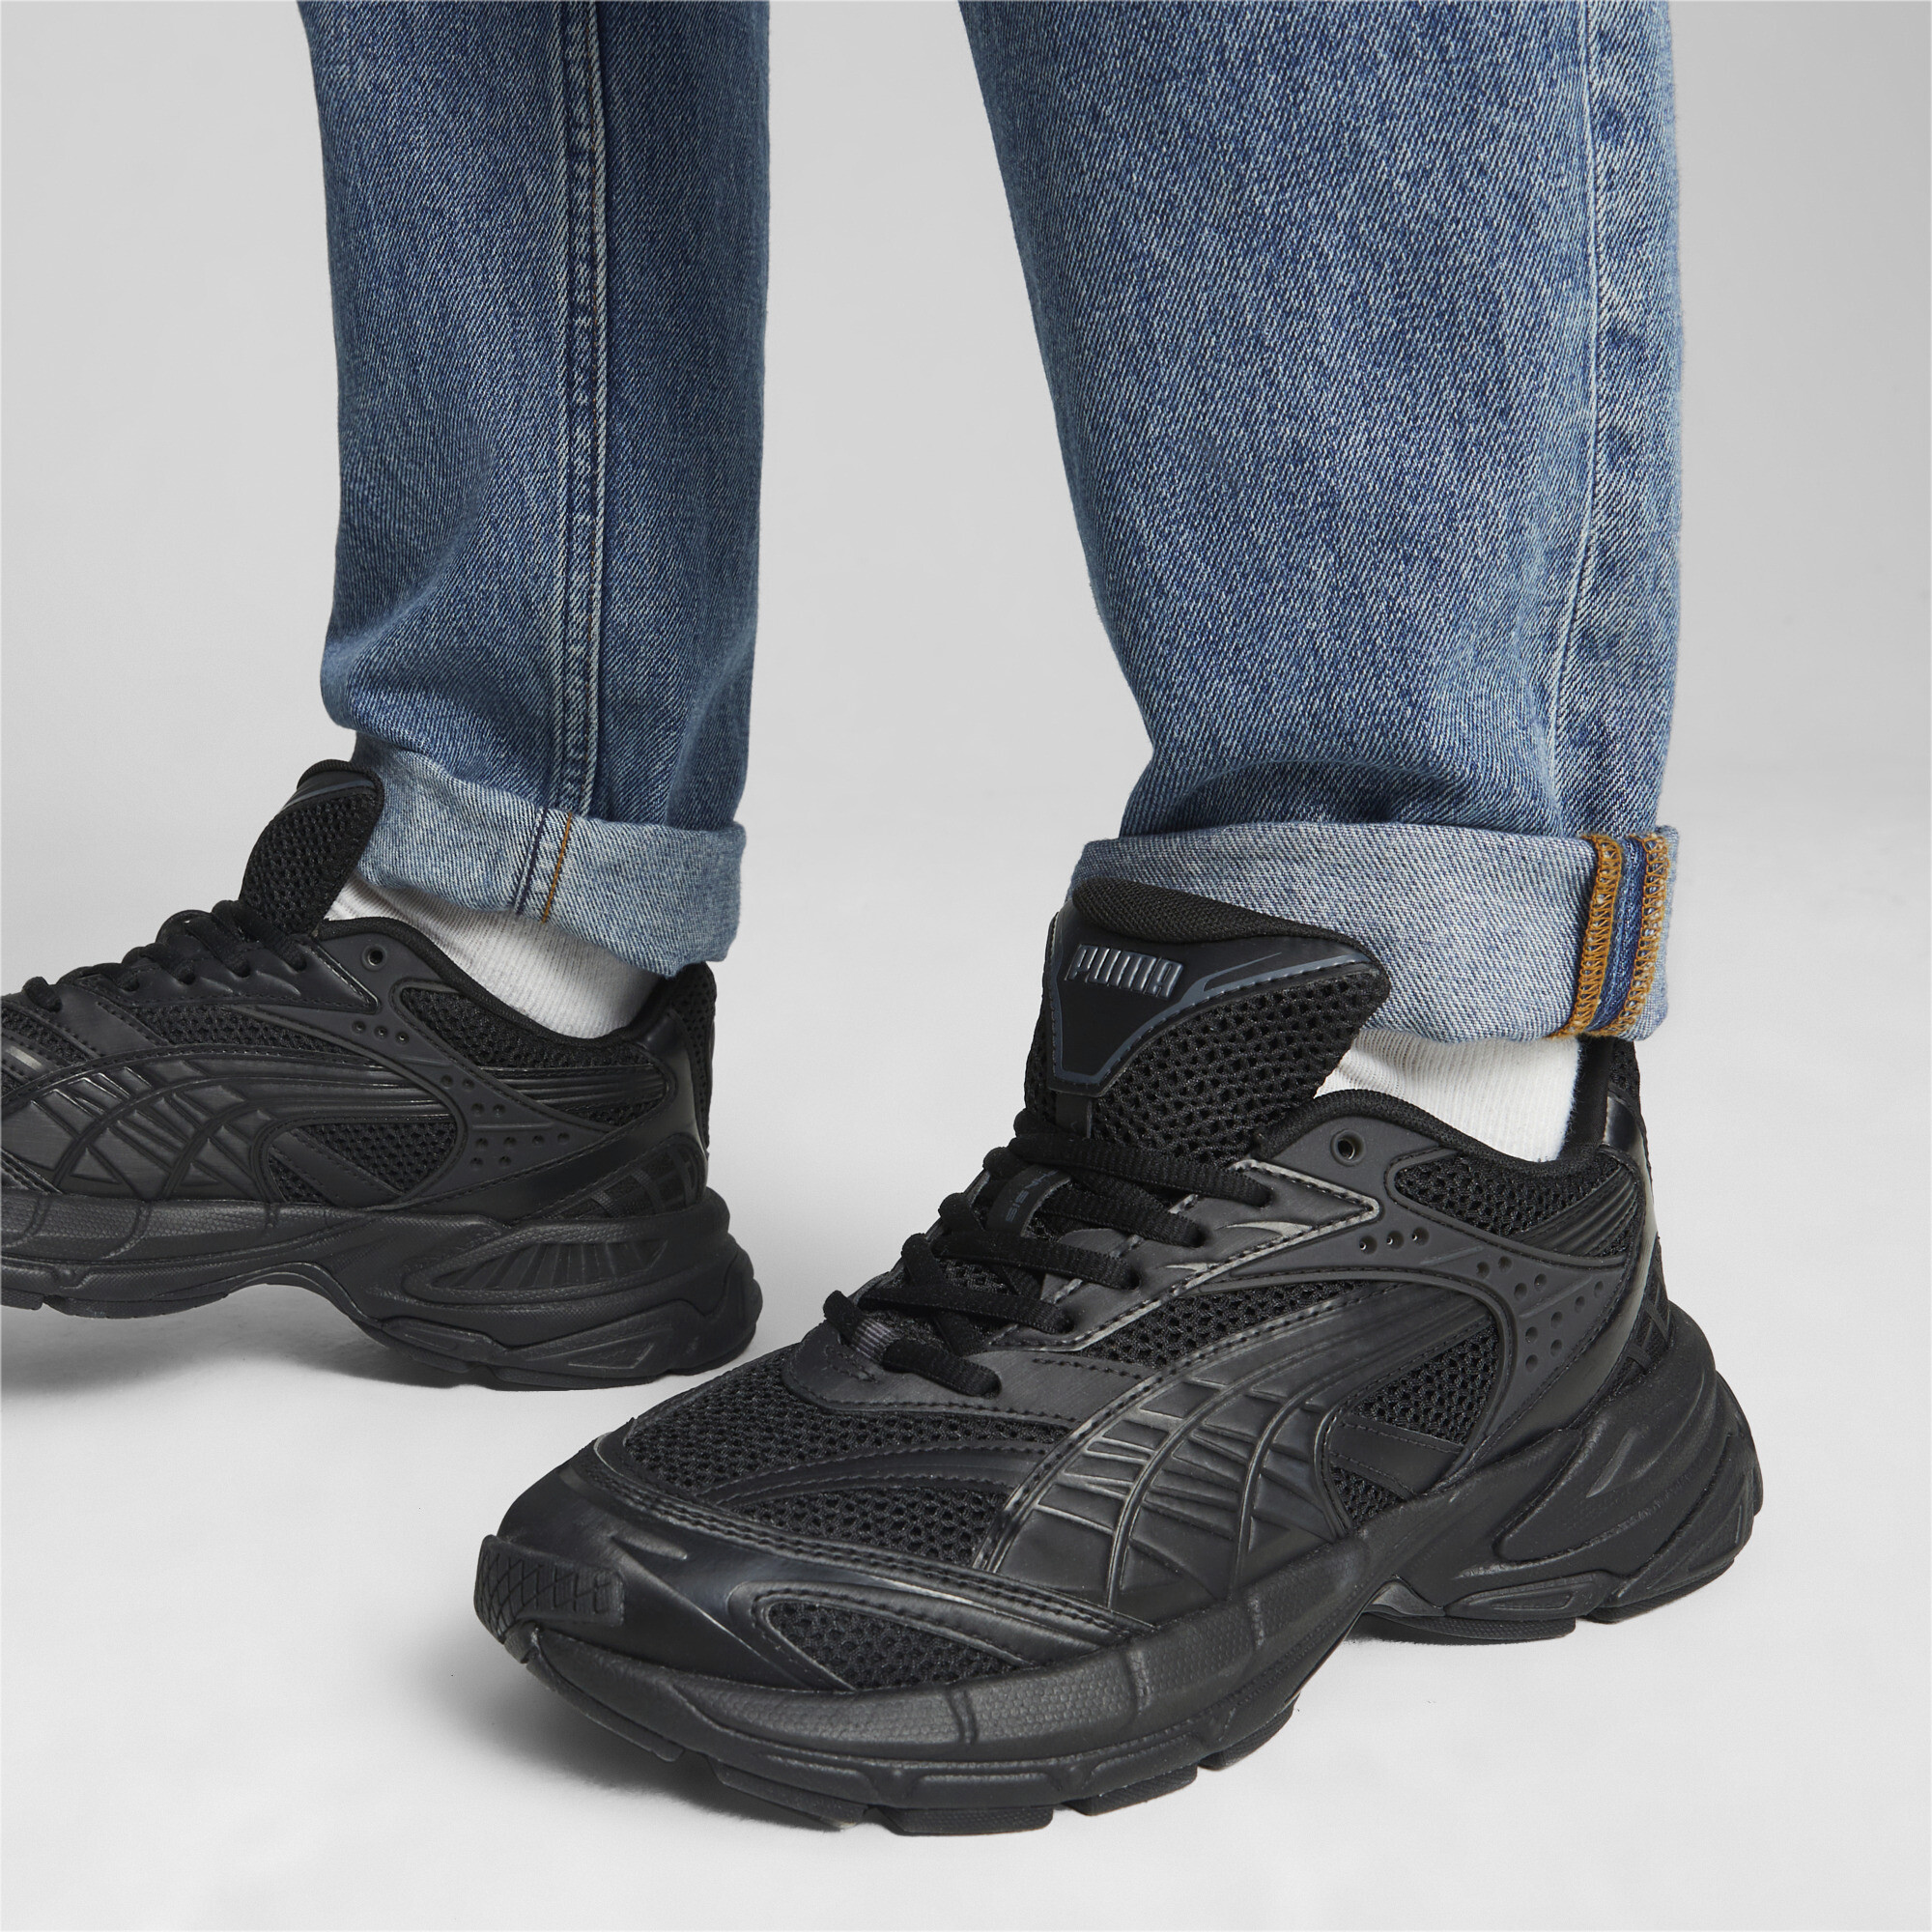 Puma Velophasis Technisch Sneakers, Black, Size 46, Shoes